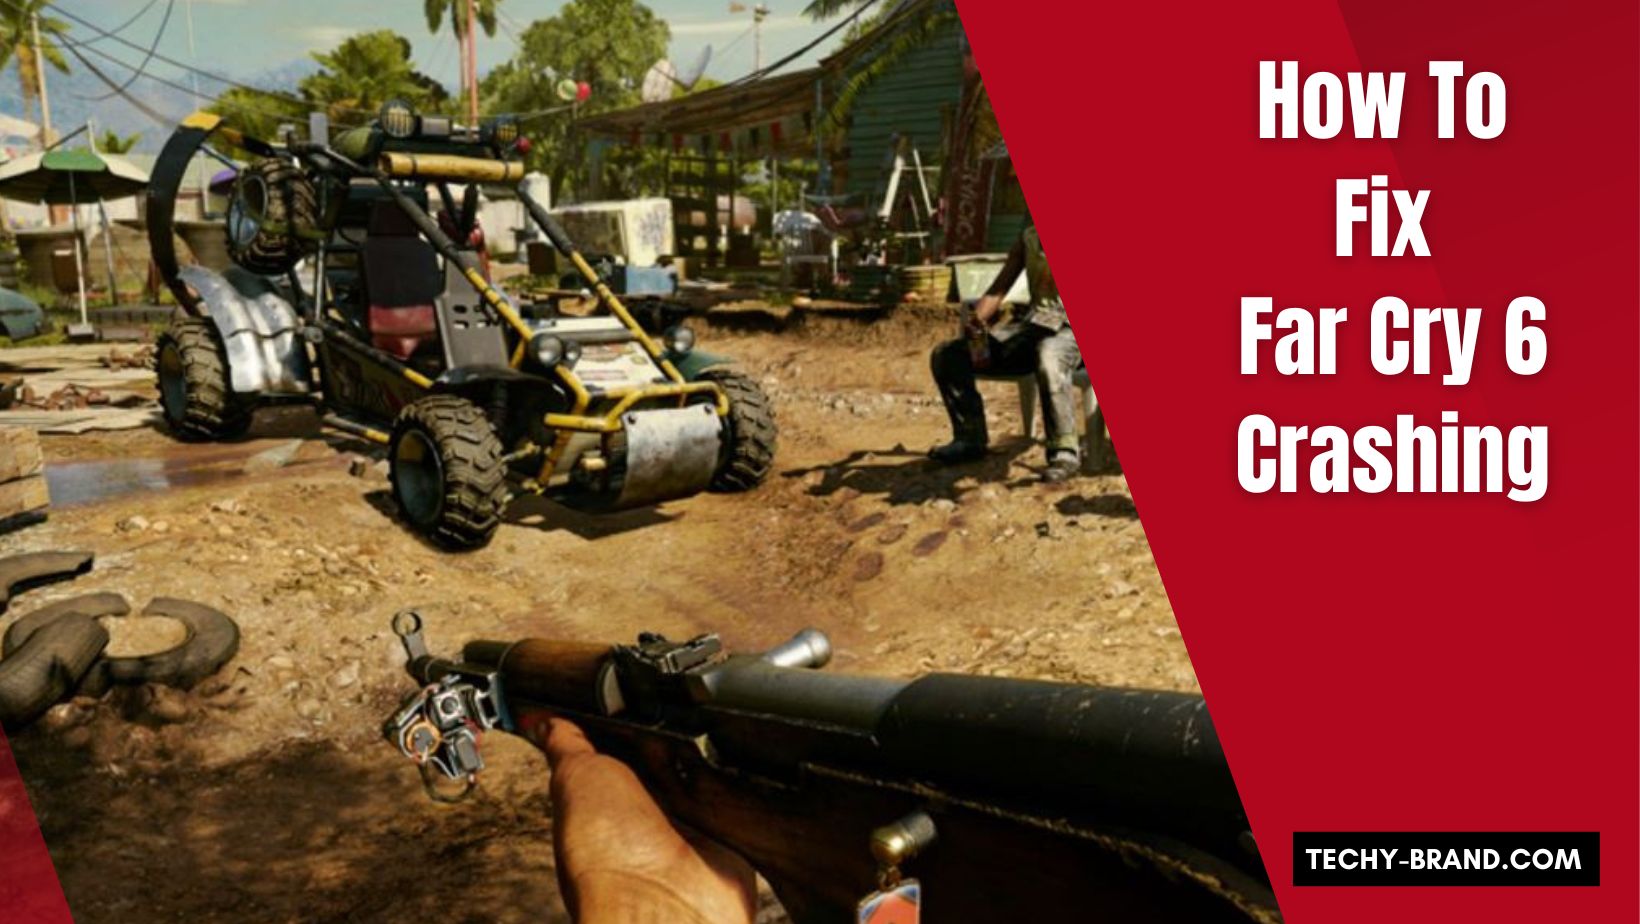 How To Fix Far Cry 6 Crashing